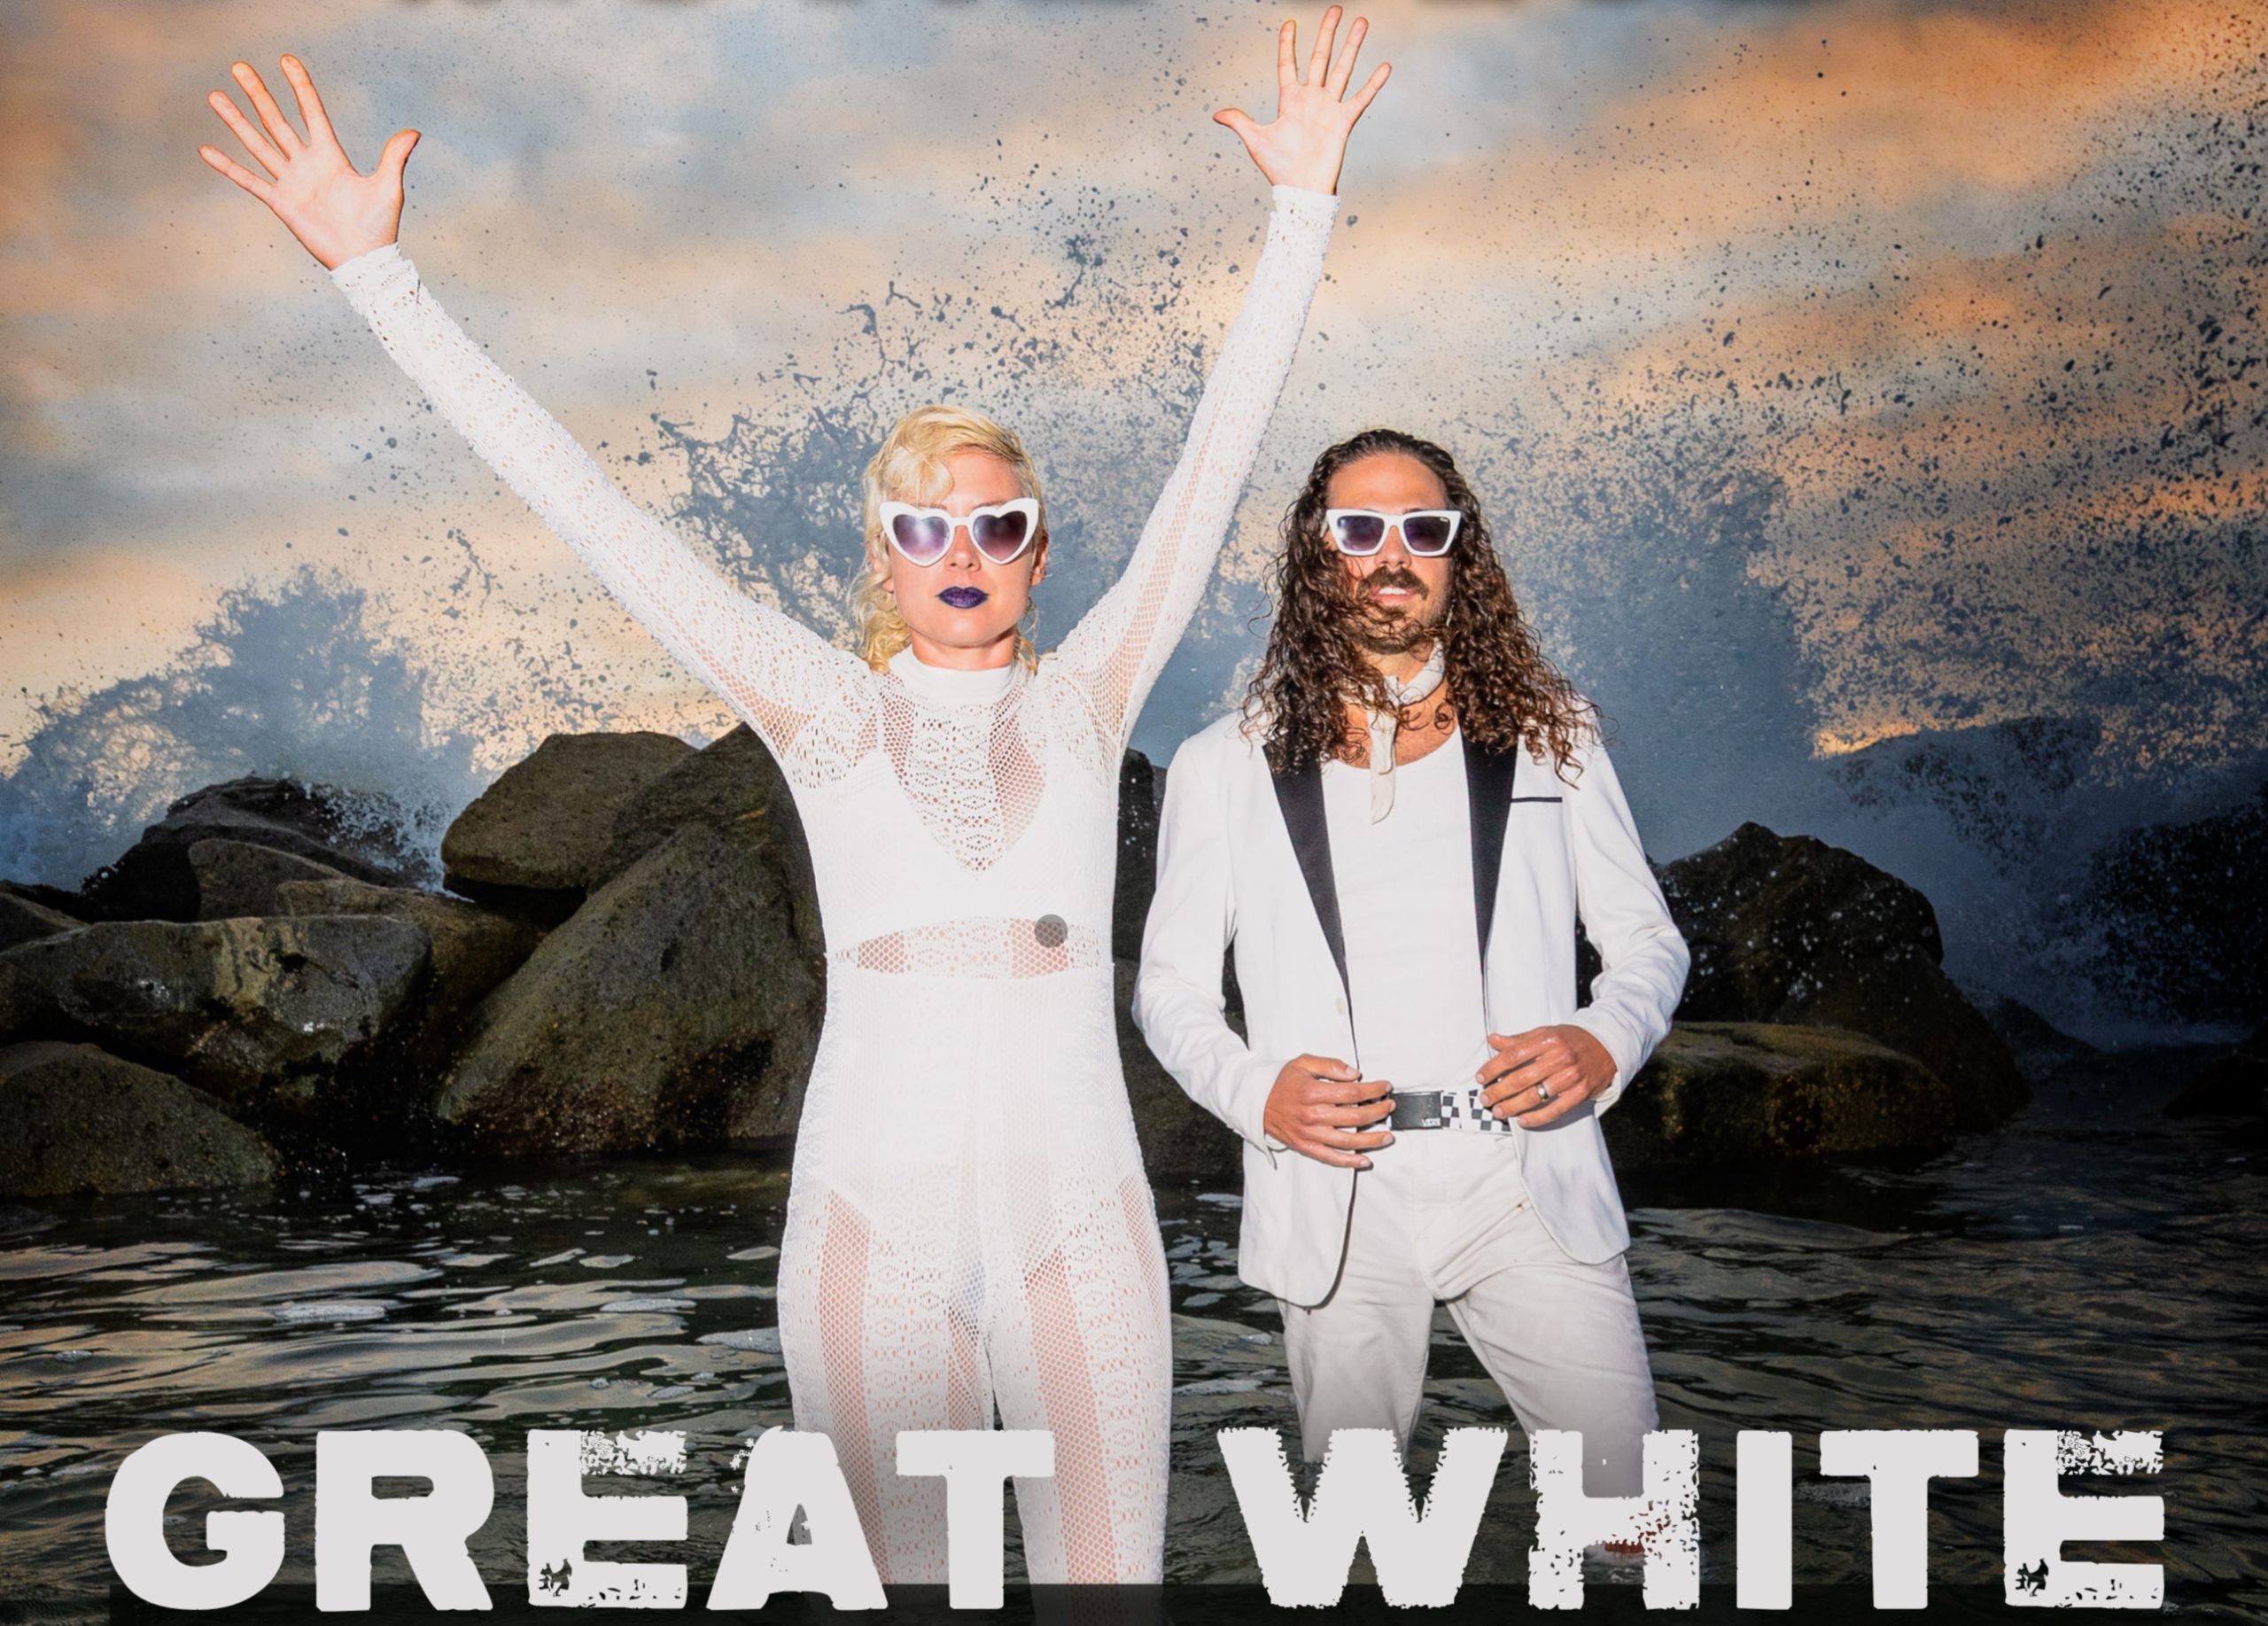 MUST HEAR: Movie Club’s Instrumental Rock Opus ‘Great White’